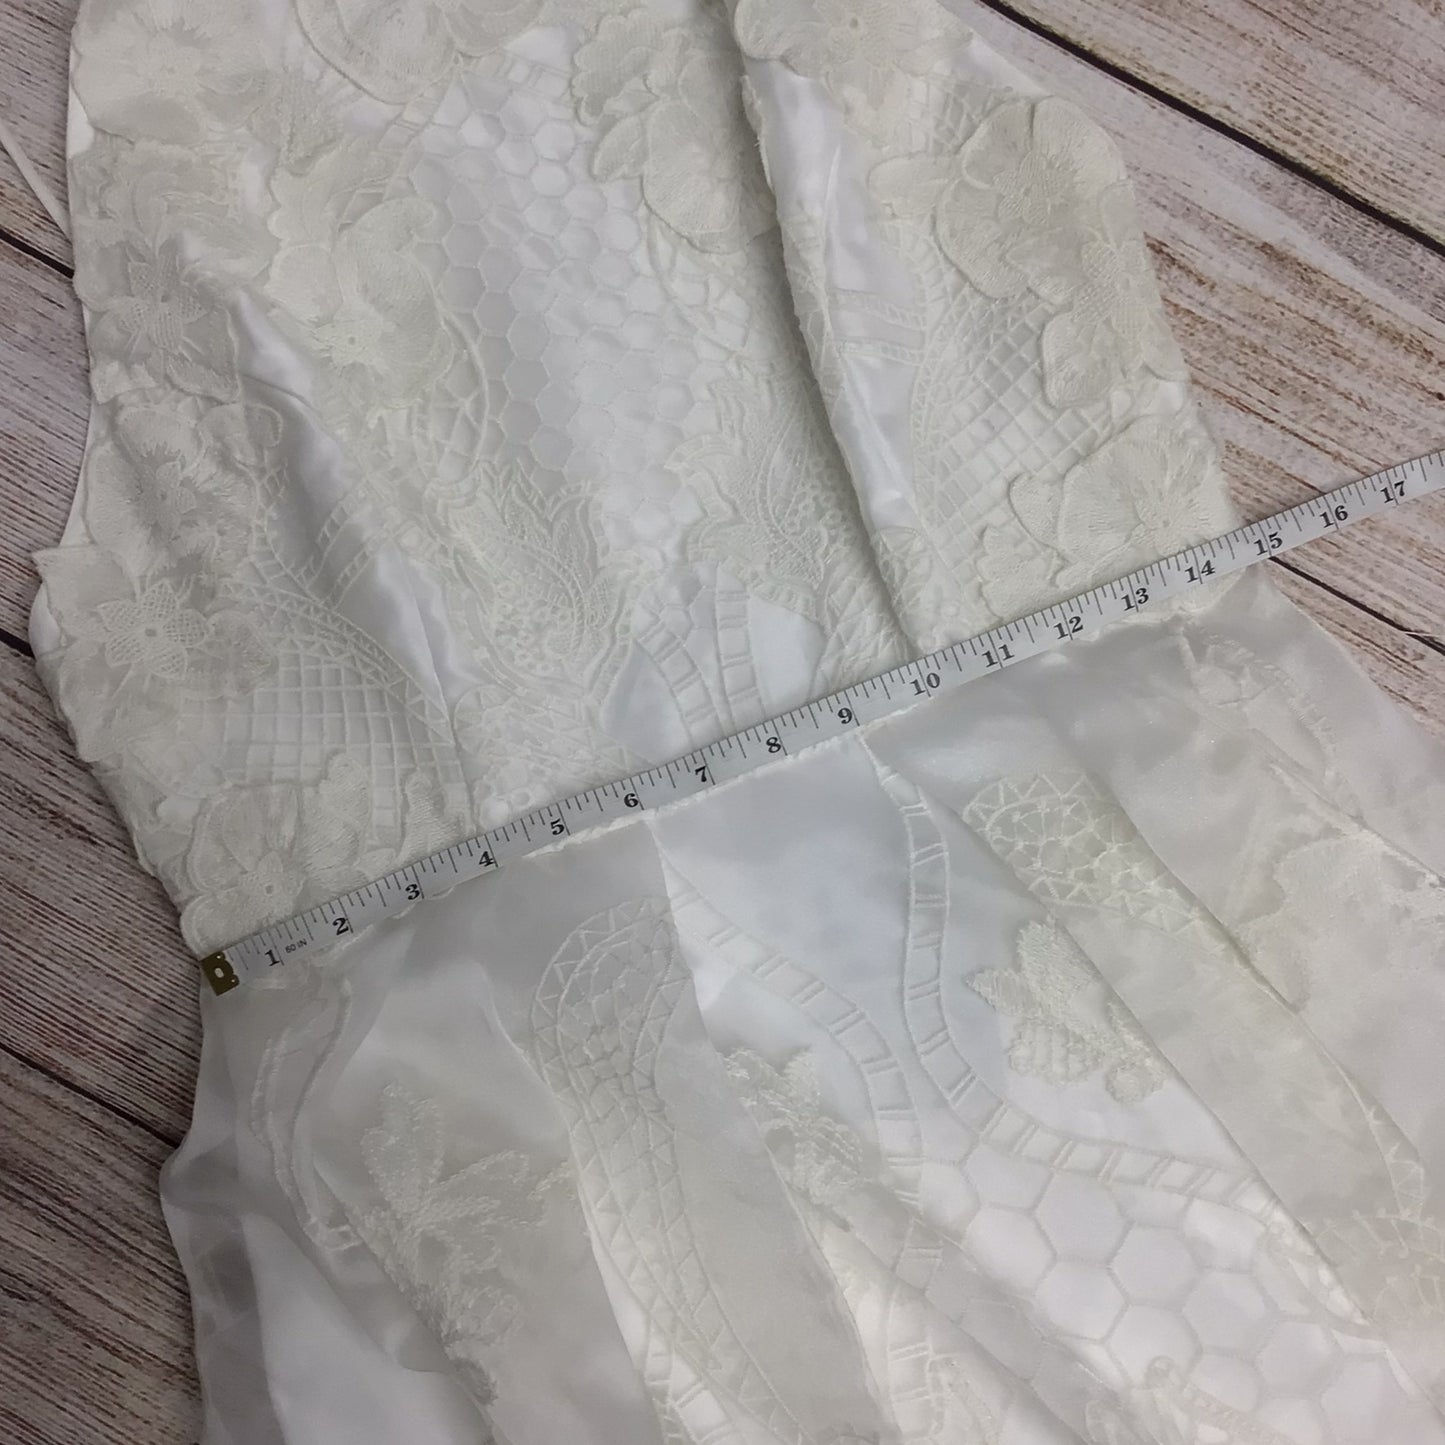 BNWT ASOS Bridal Cream & White Crochet Backless Dress Size 12